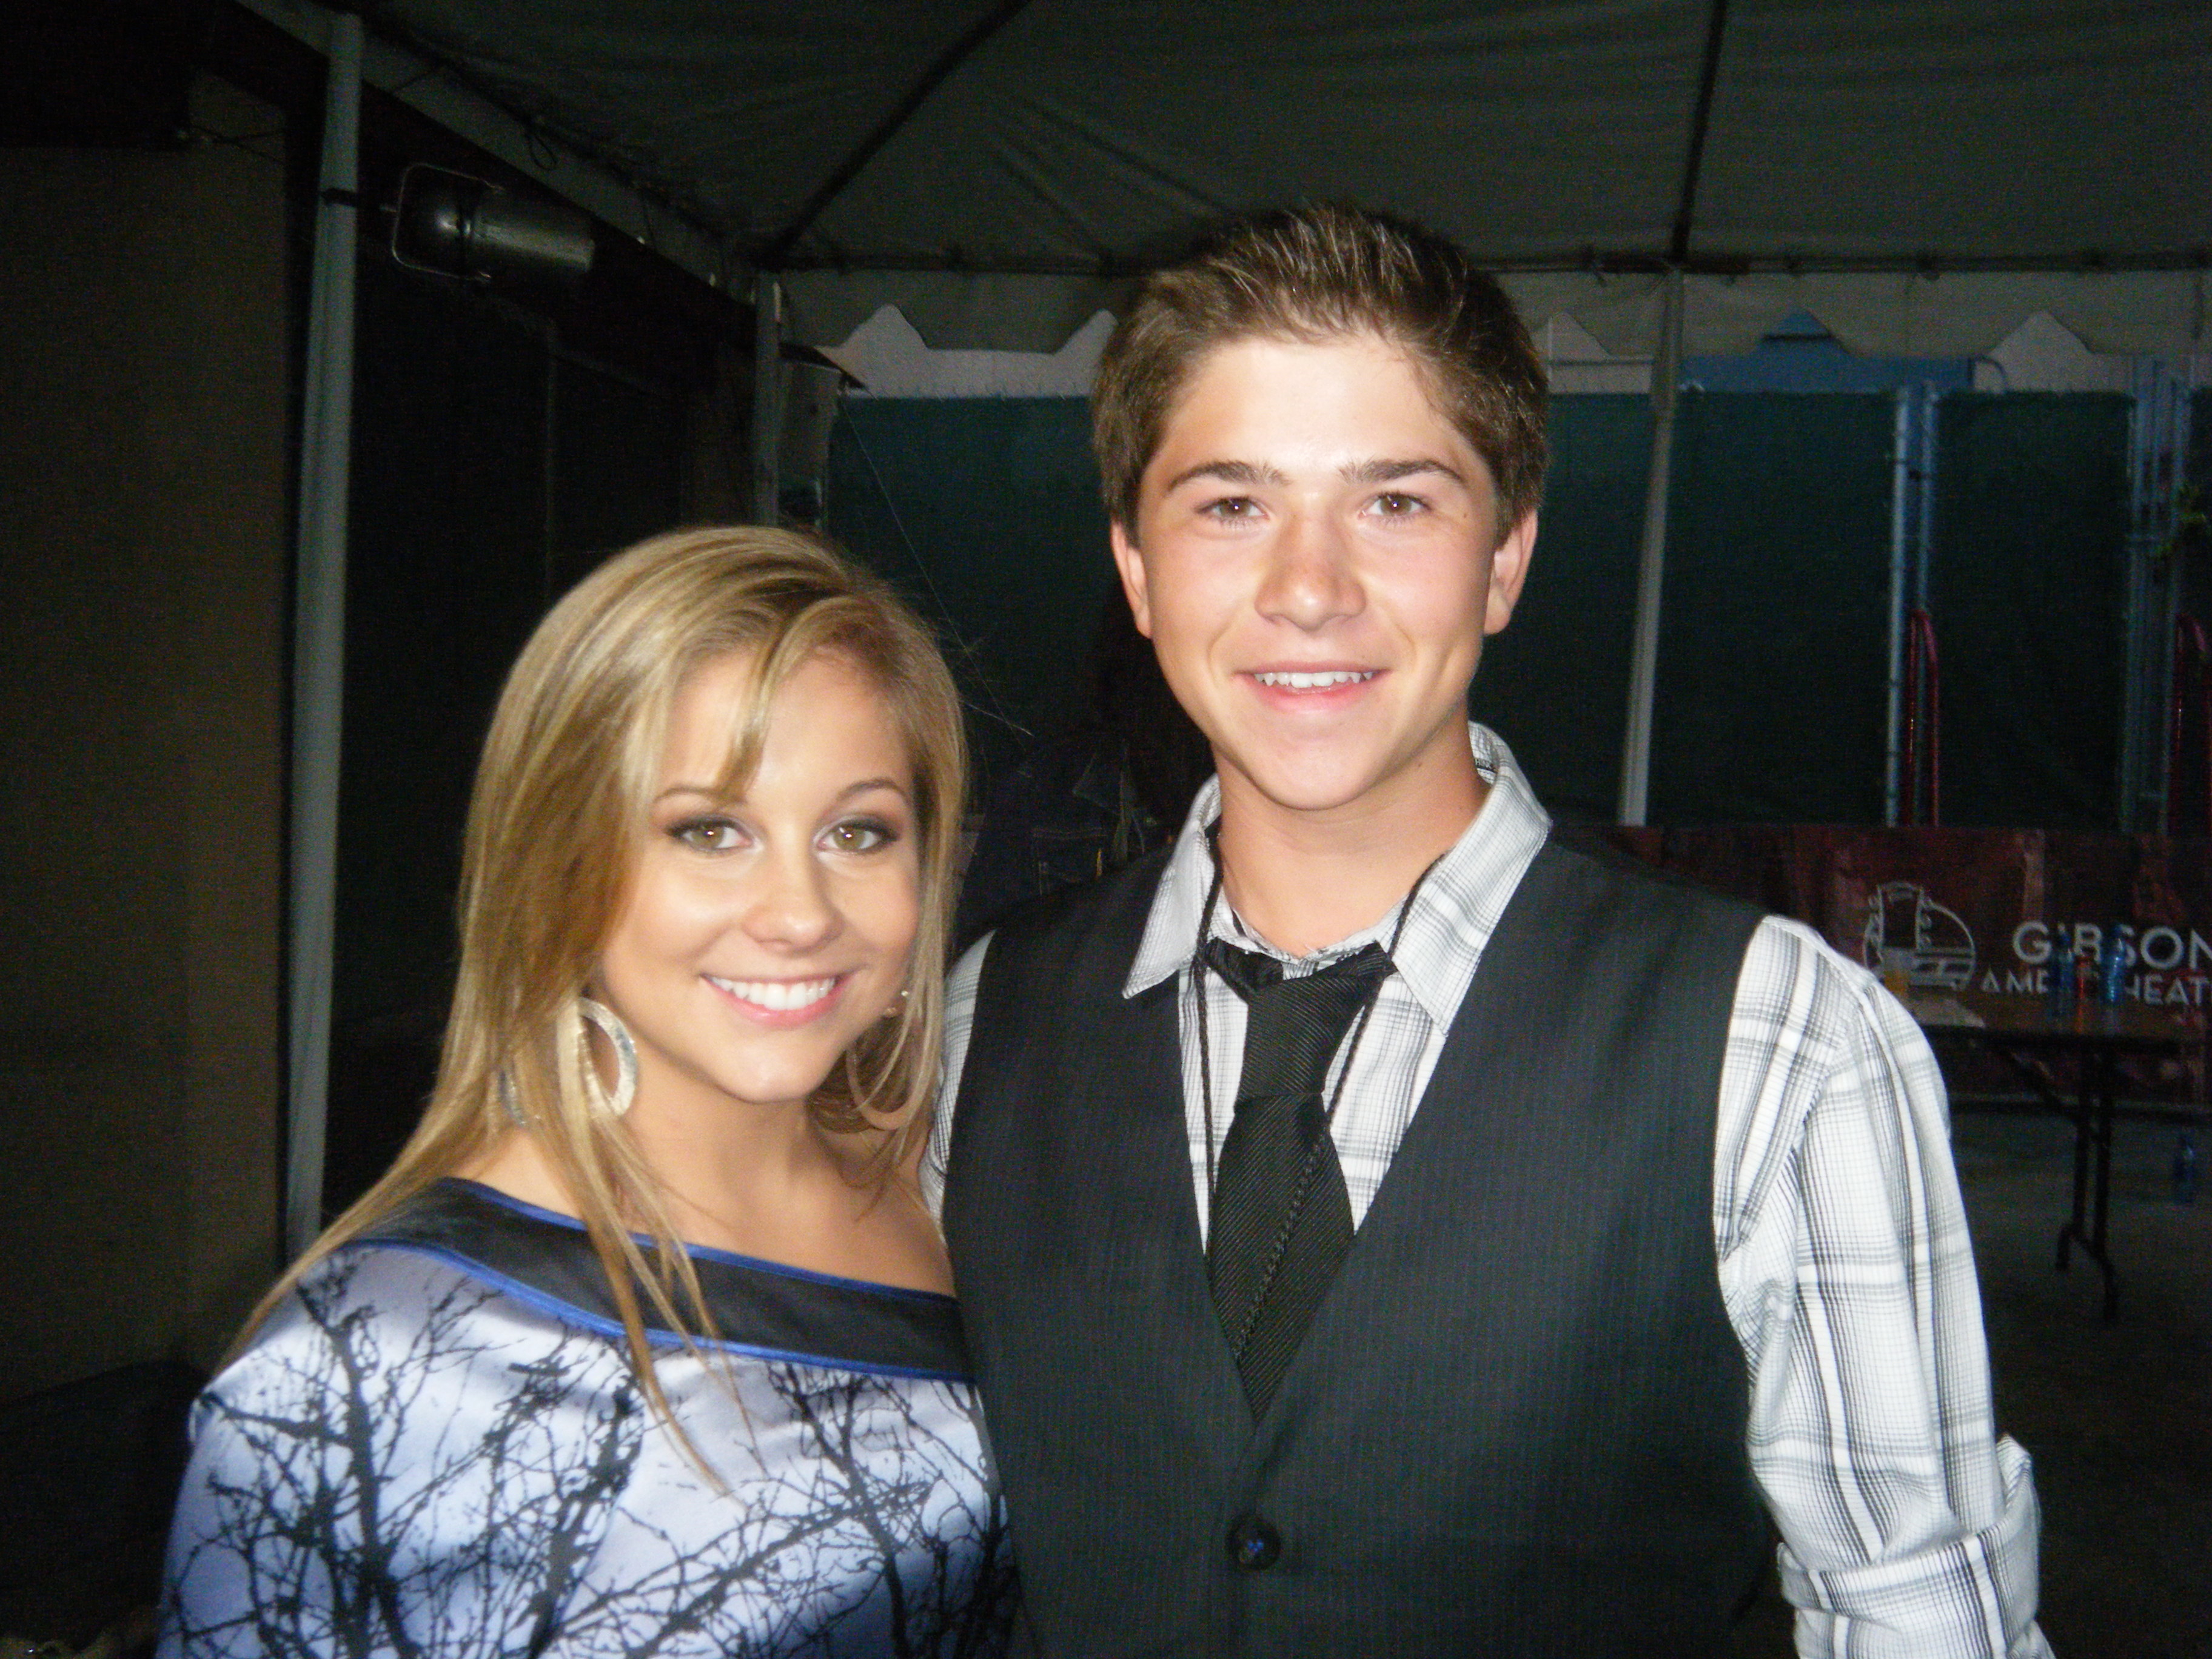 Wyatt Smith & Shawn Johnson, Teen Choice Awards. 2009